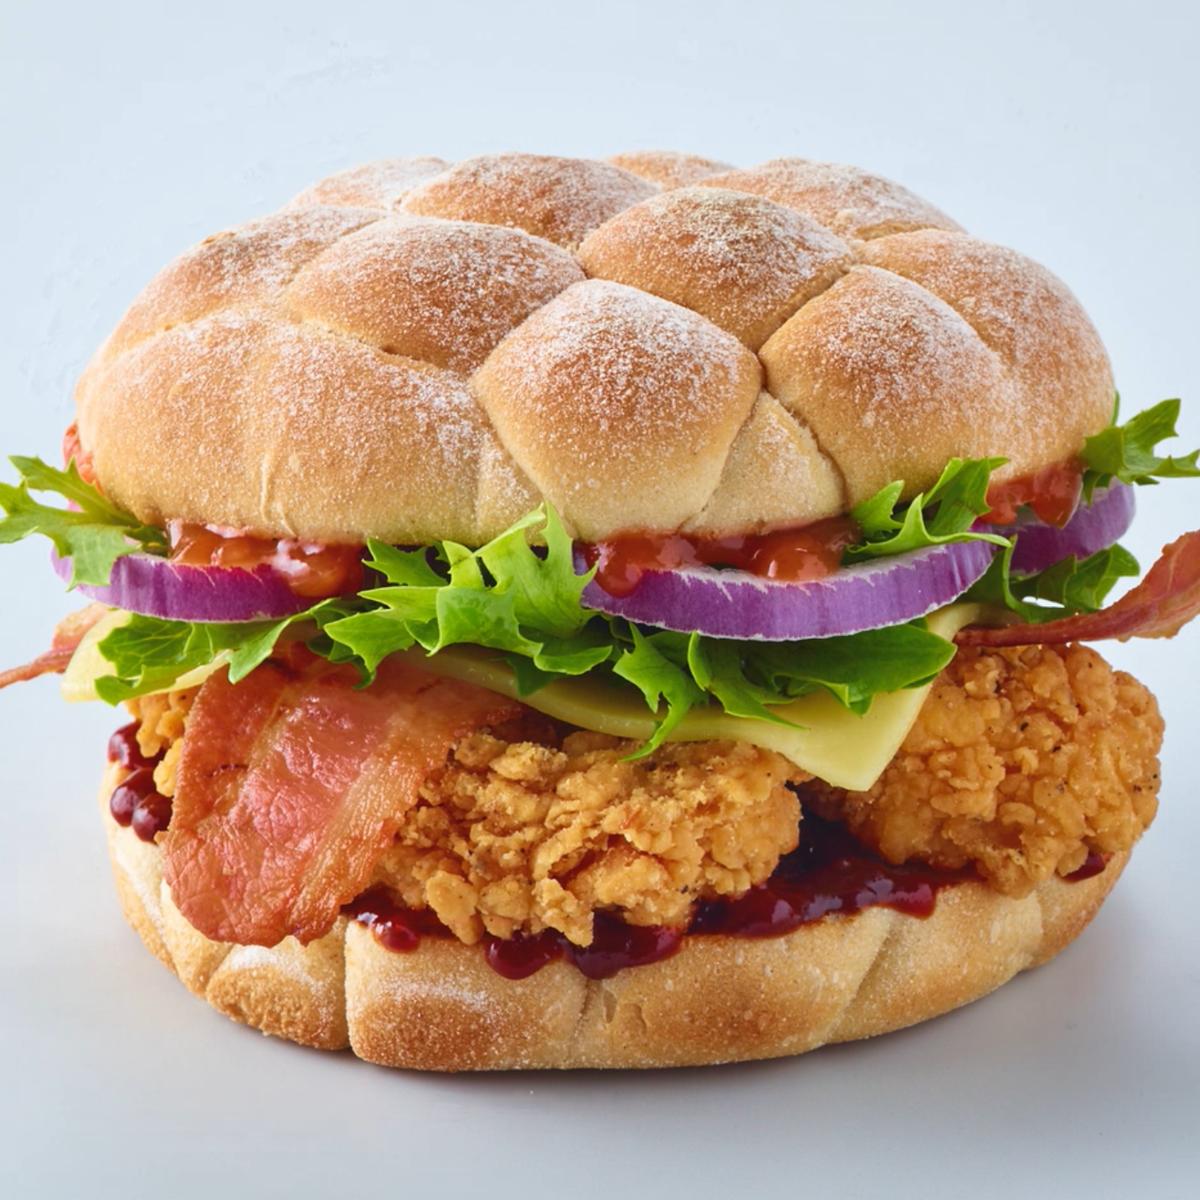 bbq smokehouse burger mcdonalds - Does Mcdonalds have a BBQ burger